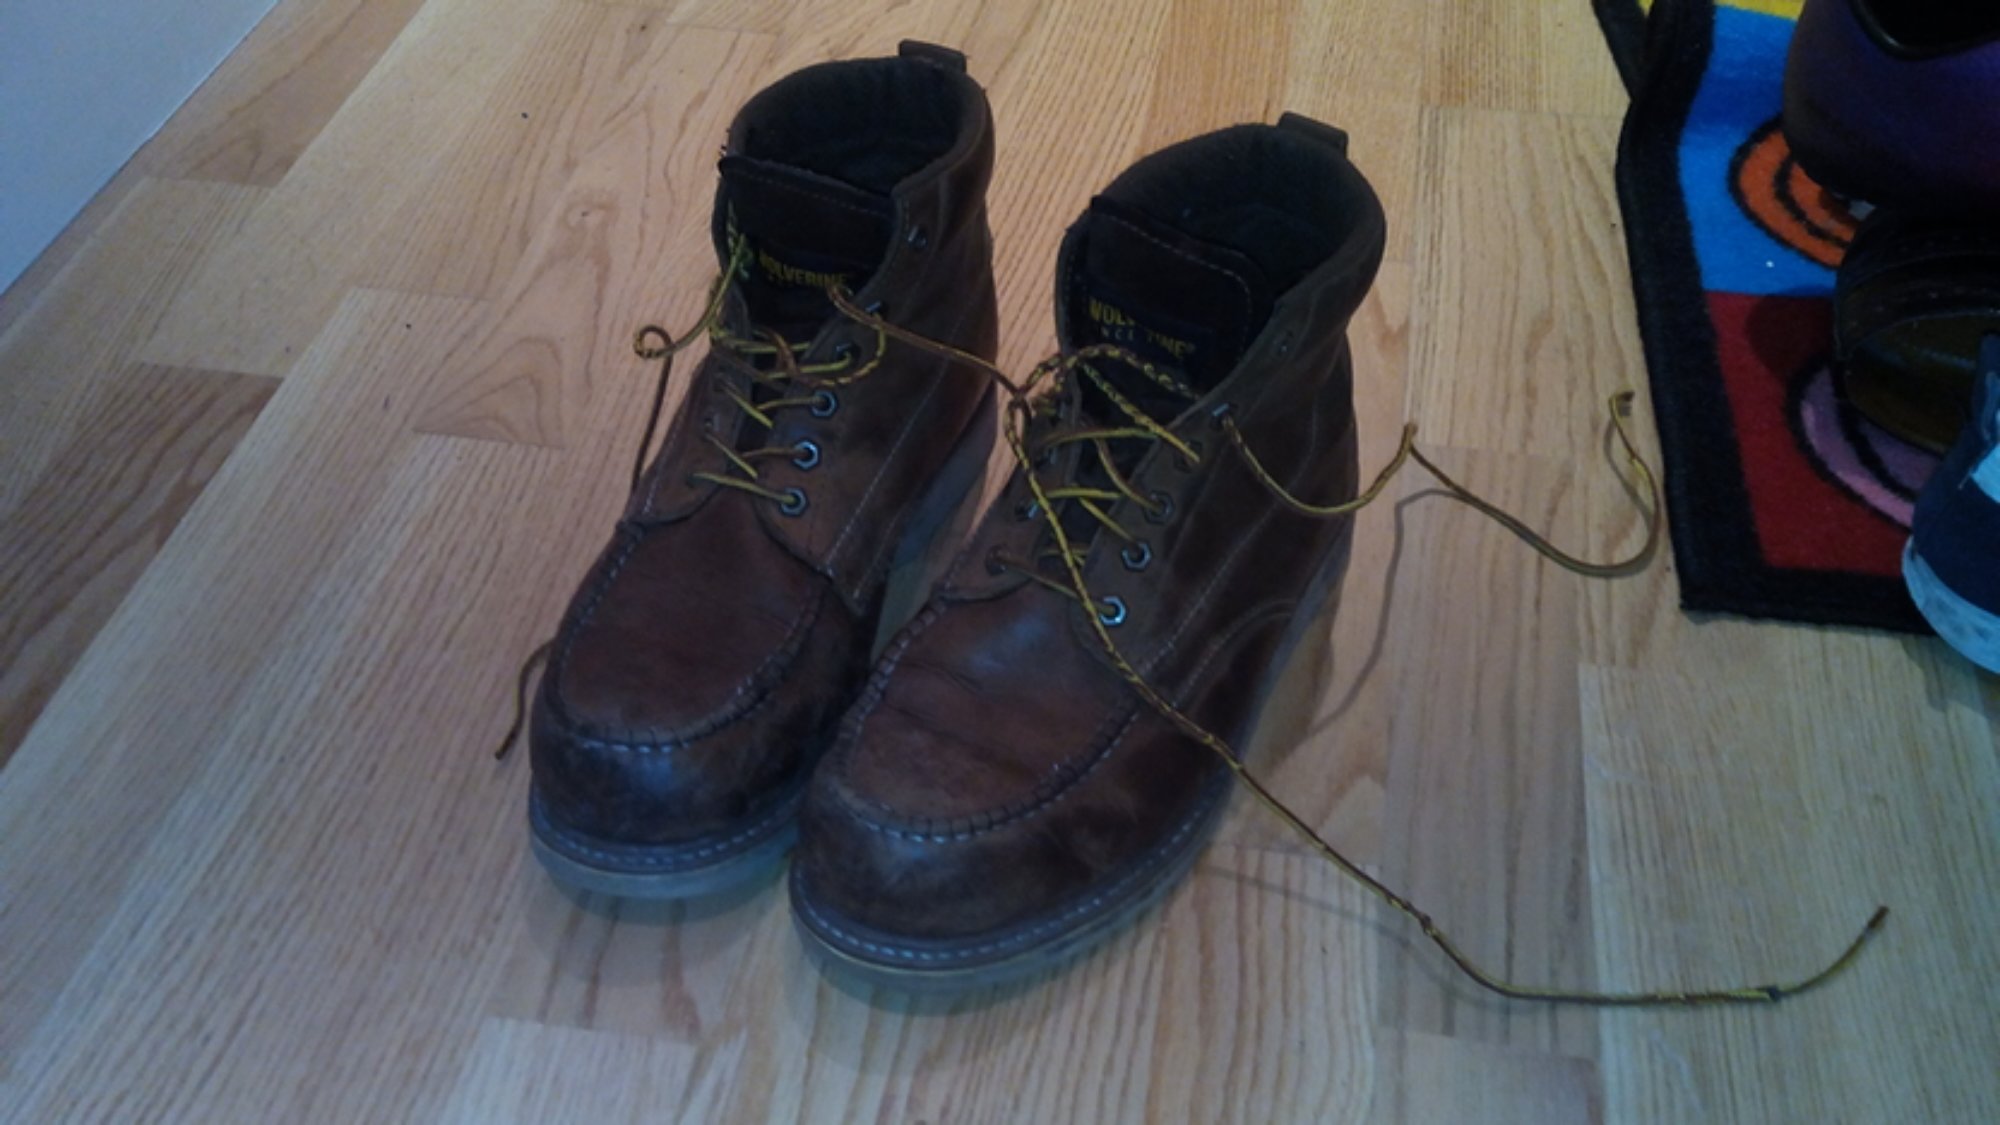 wolverine apprentice boots